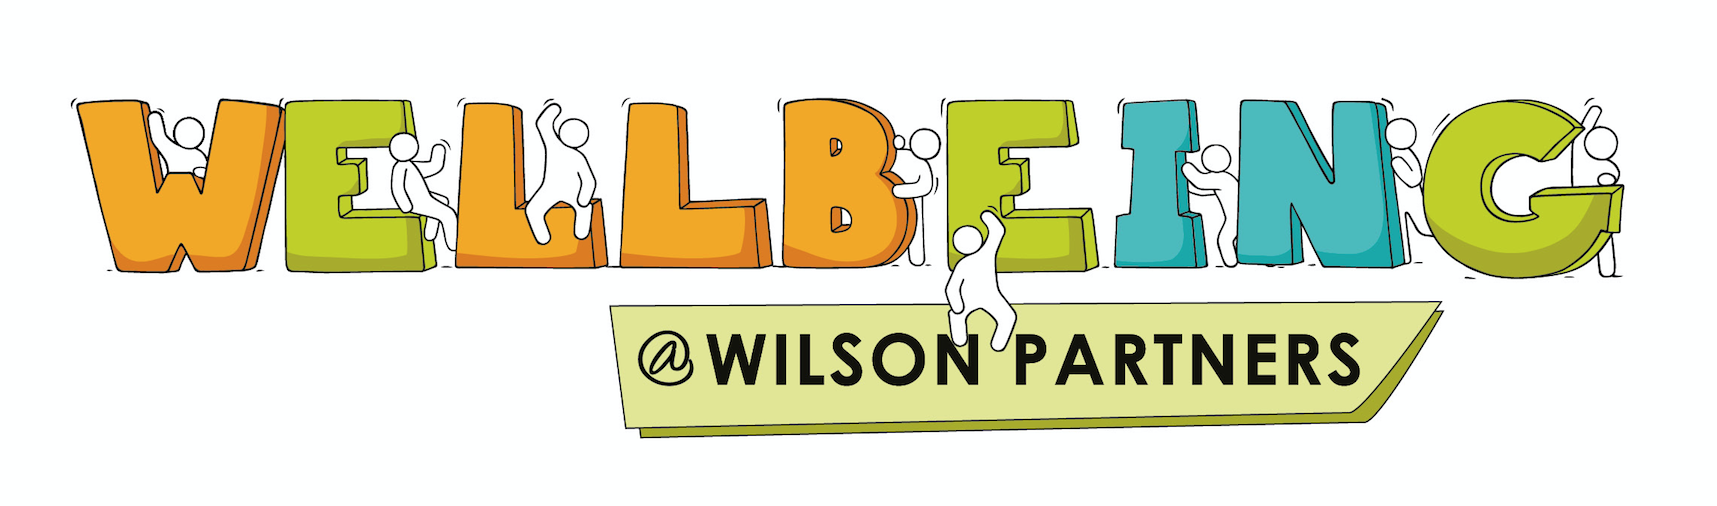 Employee wellbeing logo Wilson partners